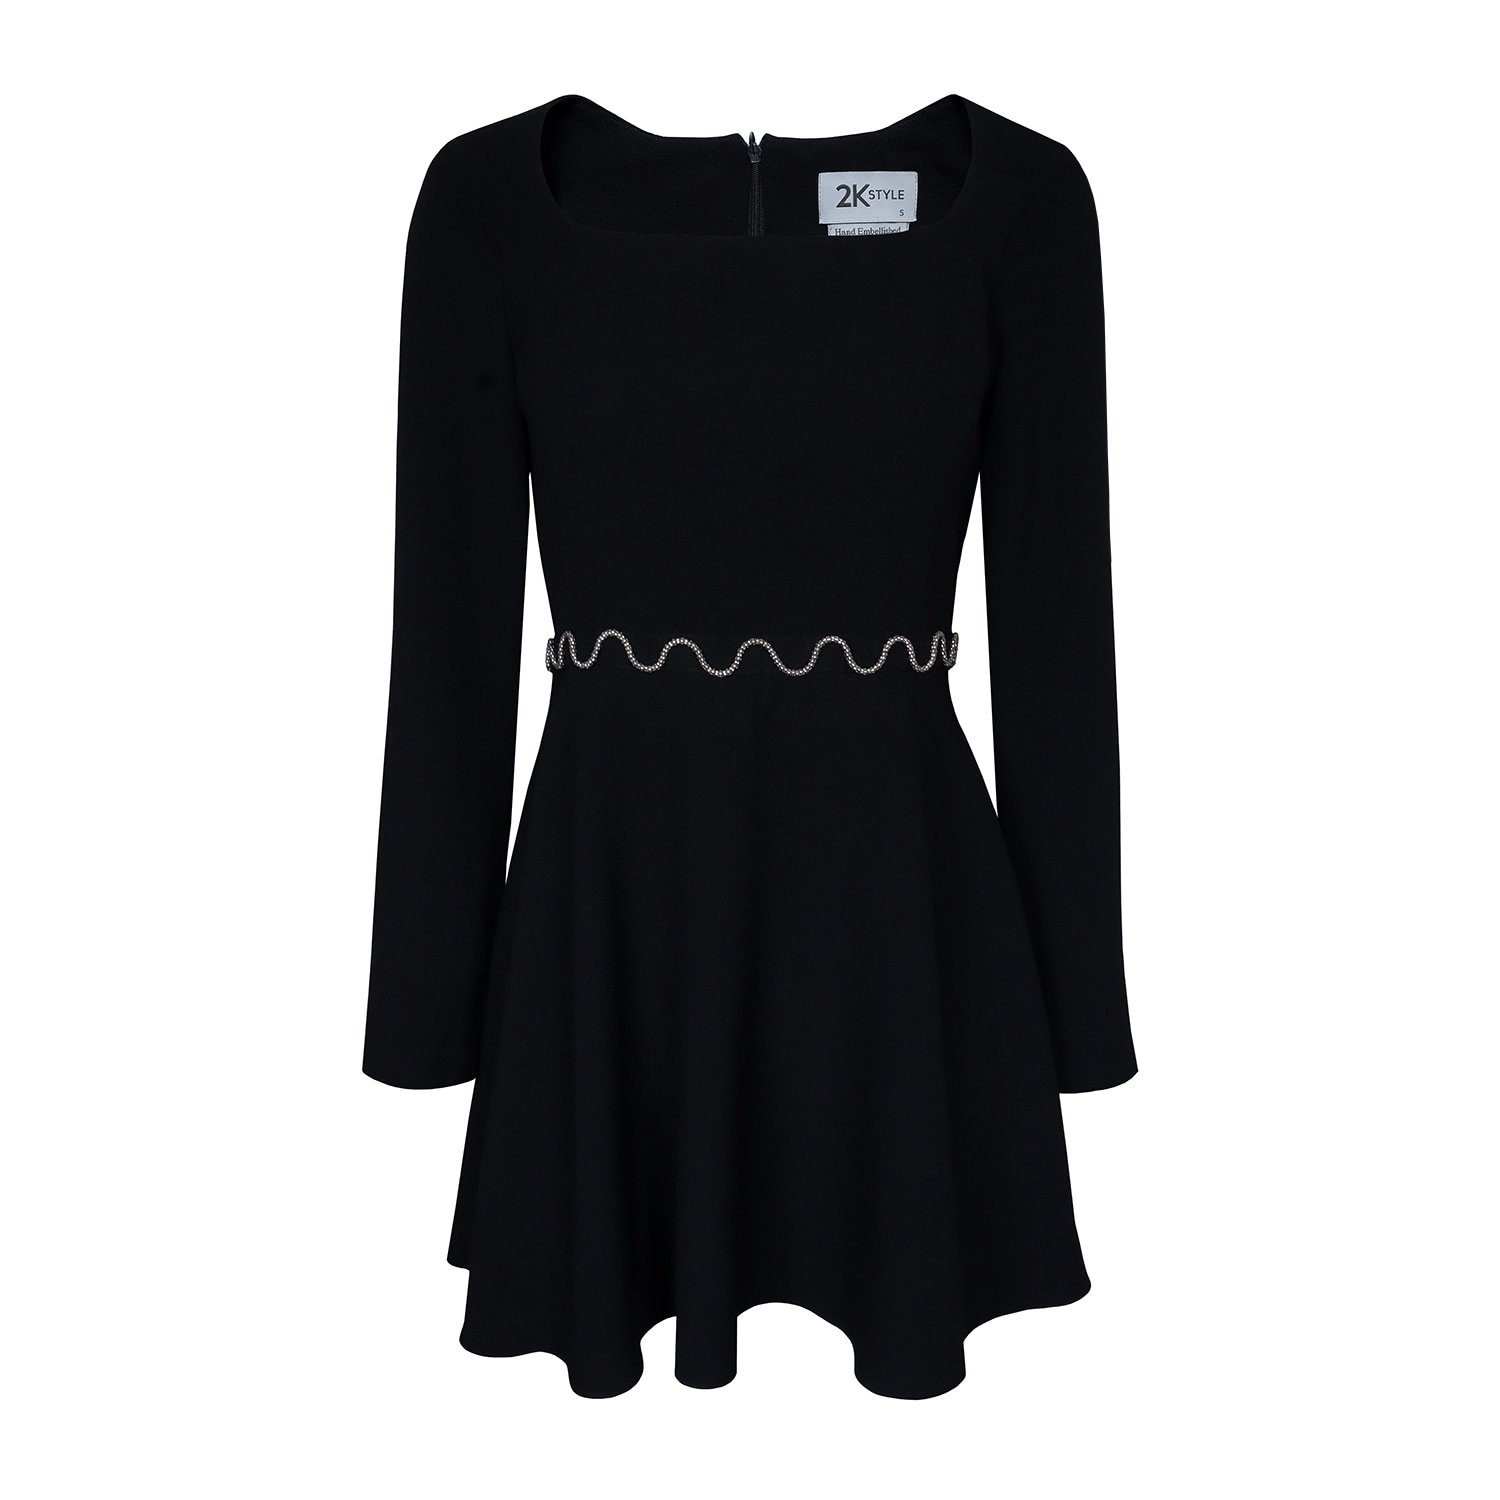 Women’s Brigitte Chain-Embellished Crepe Mini Dress - Black Medium 2Kstyle